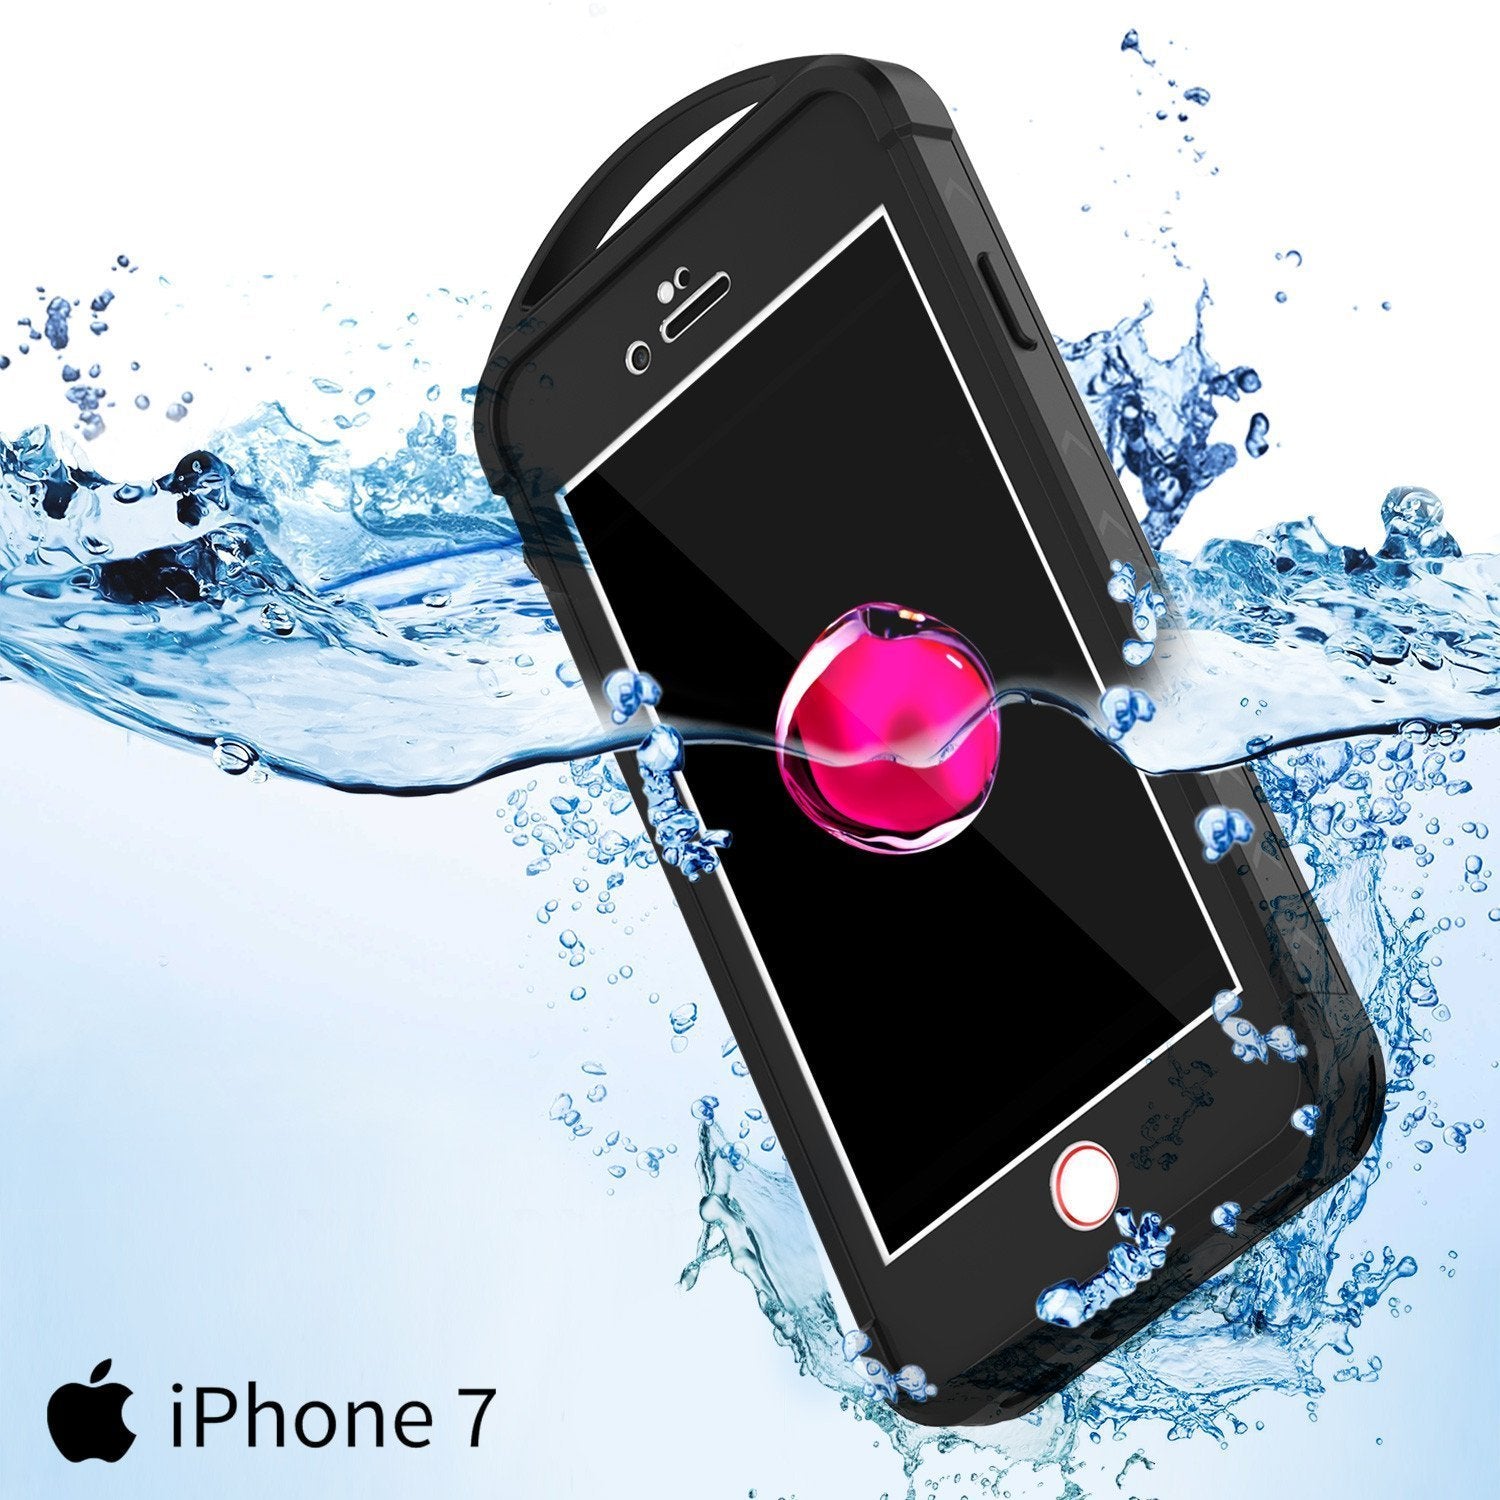 iPhone SE (4.7") Waterproof Case, Punkcase ALPINE Series, Black | Heavy Duty Armor Cover